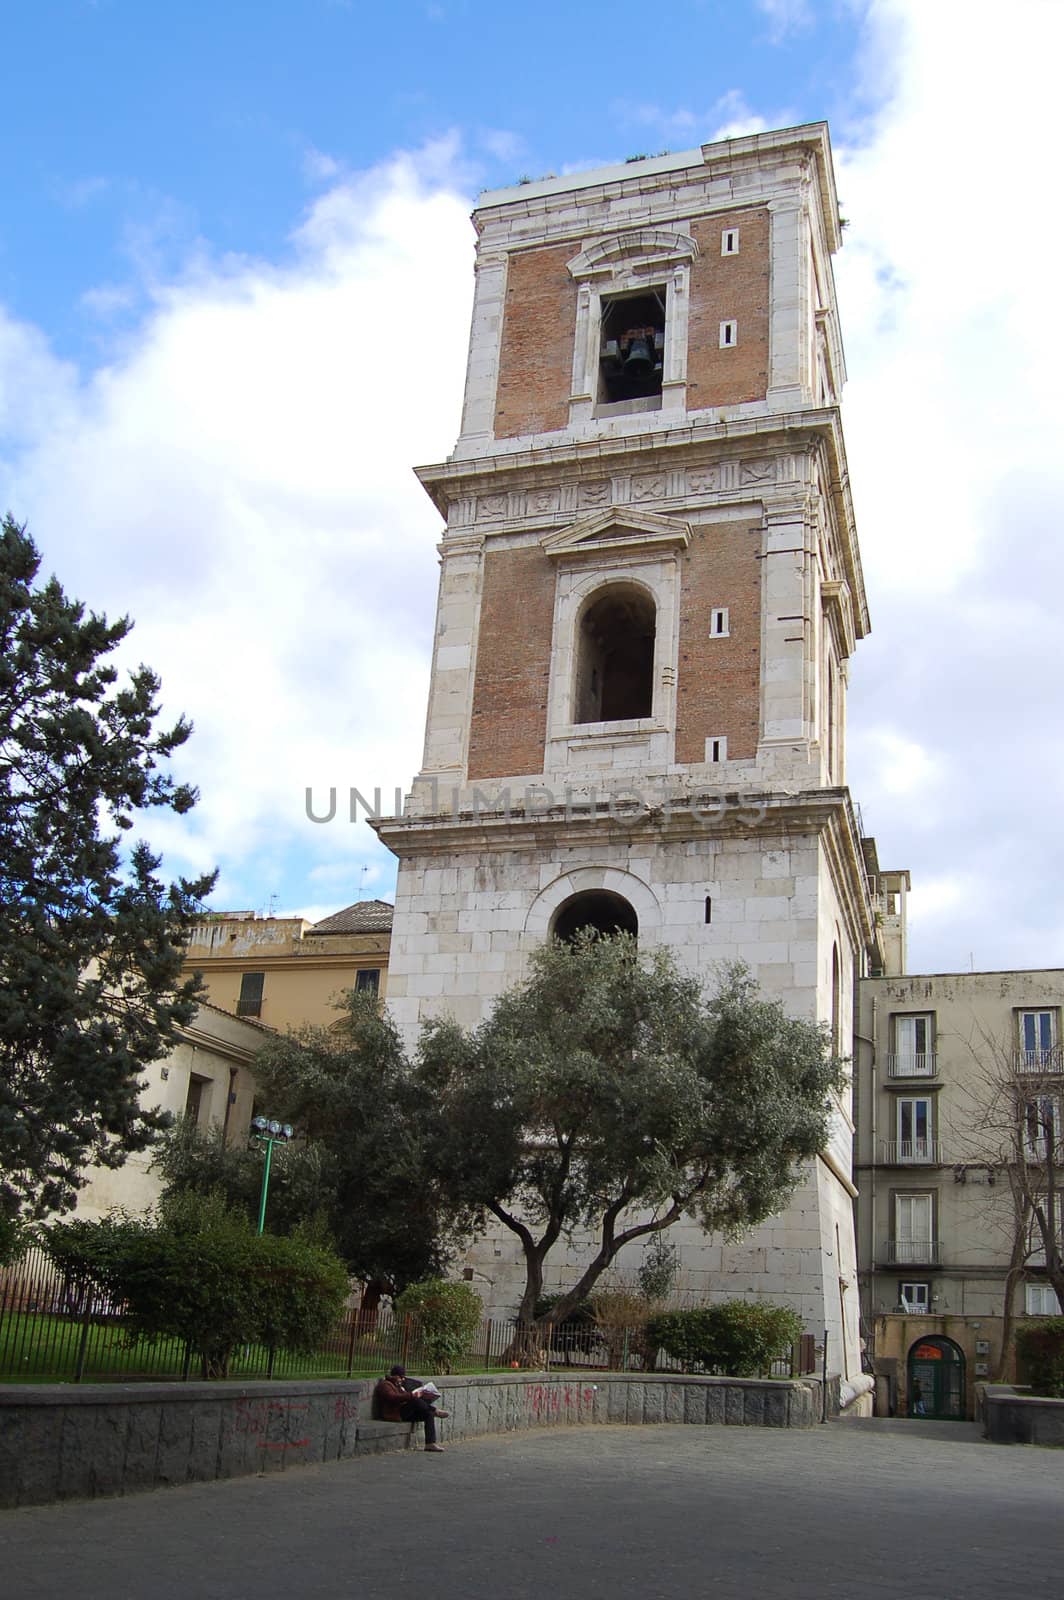 tower bell of Santa Chiara church in Naples, Italy